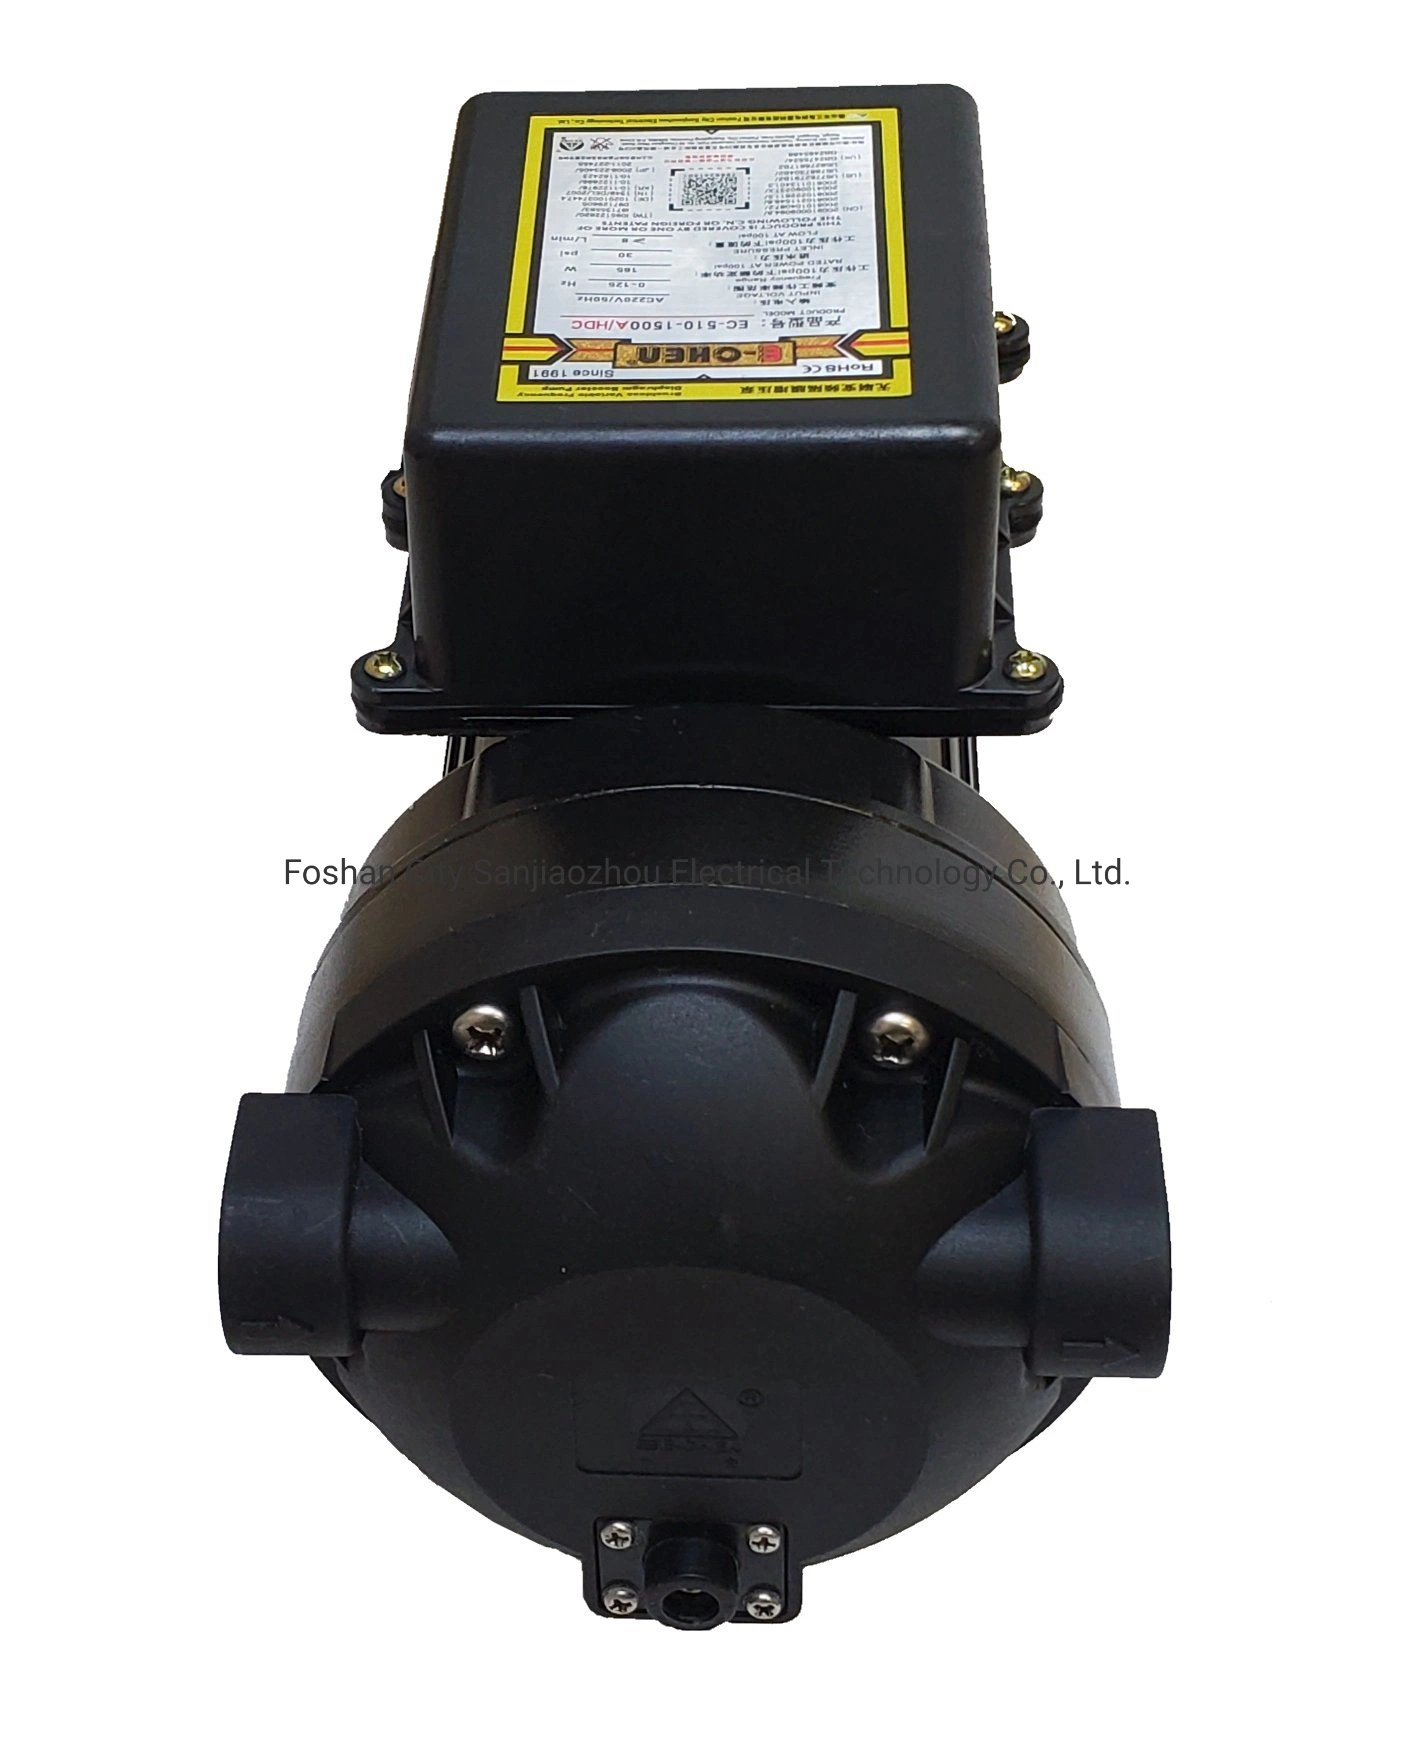 Brushless DC Motor Water Pump 220VAC 1500gpd 8.0L/Min@100psi Max 160psi